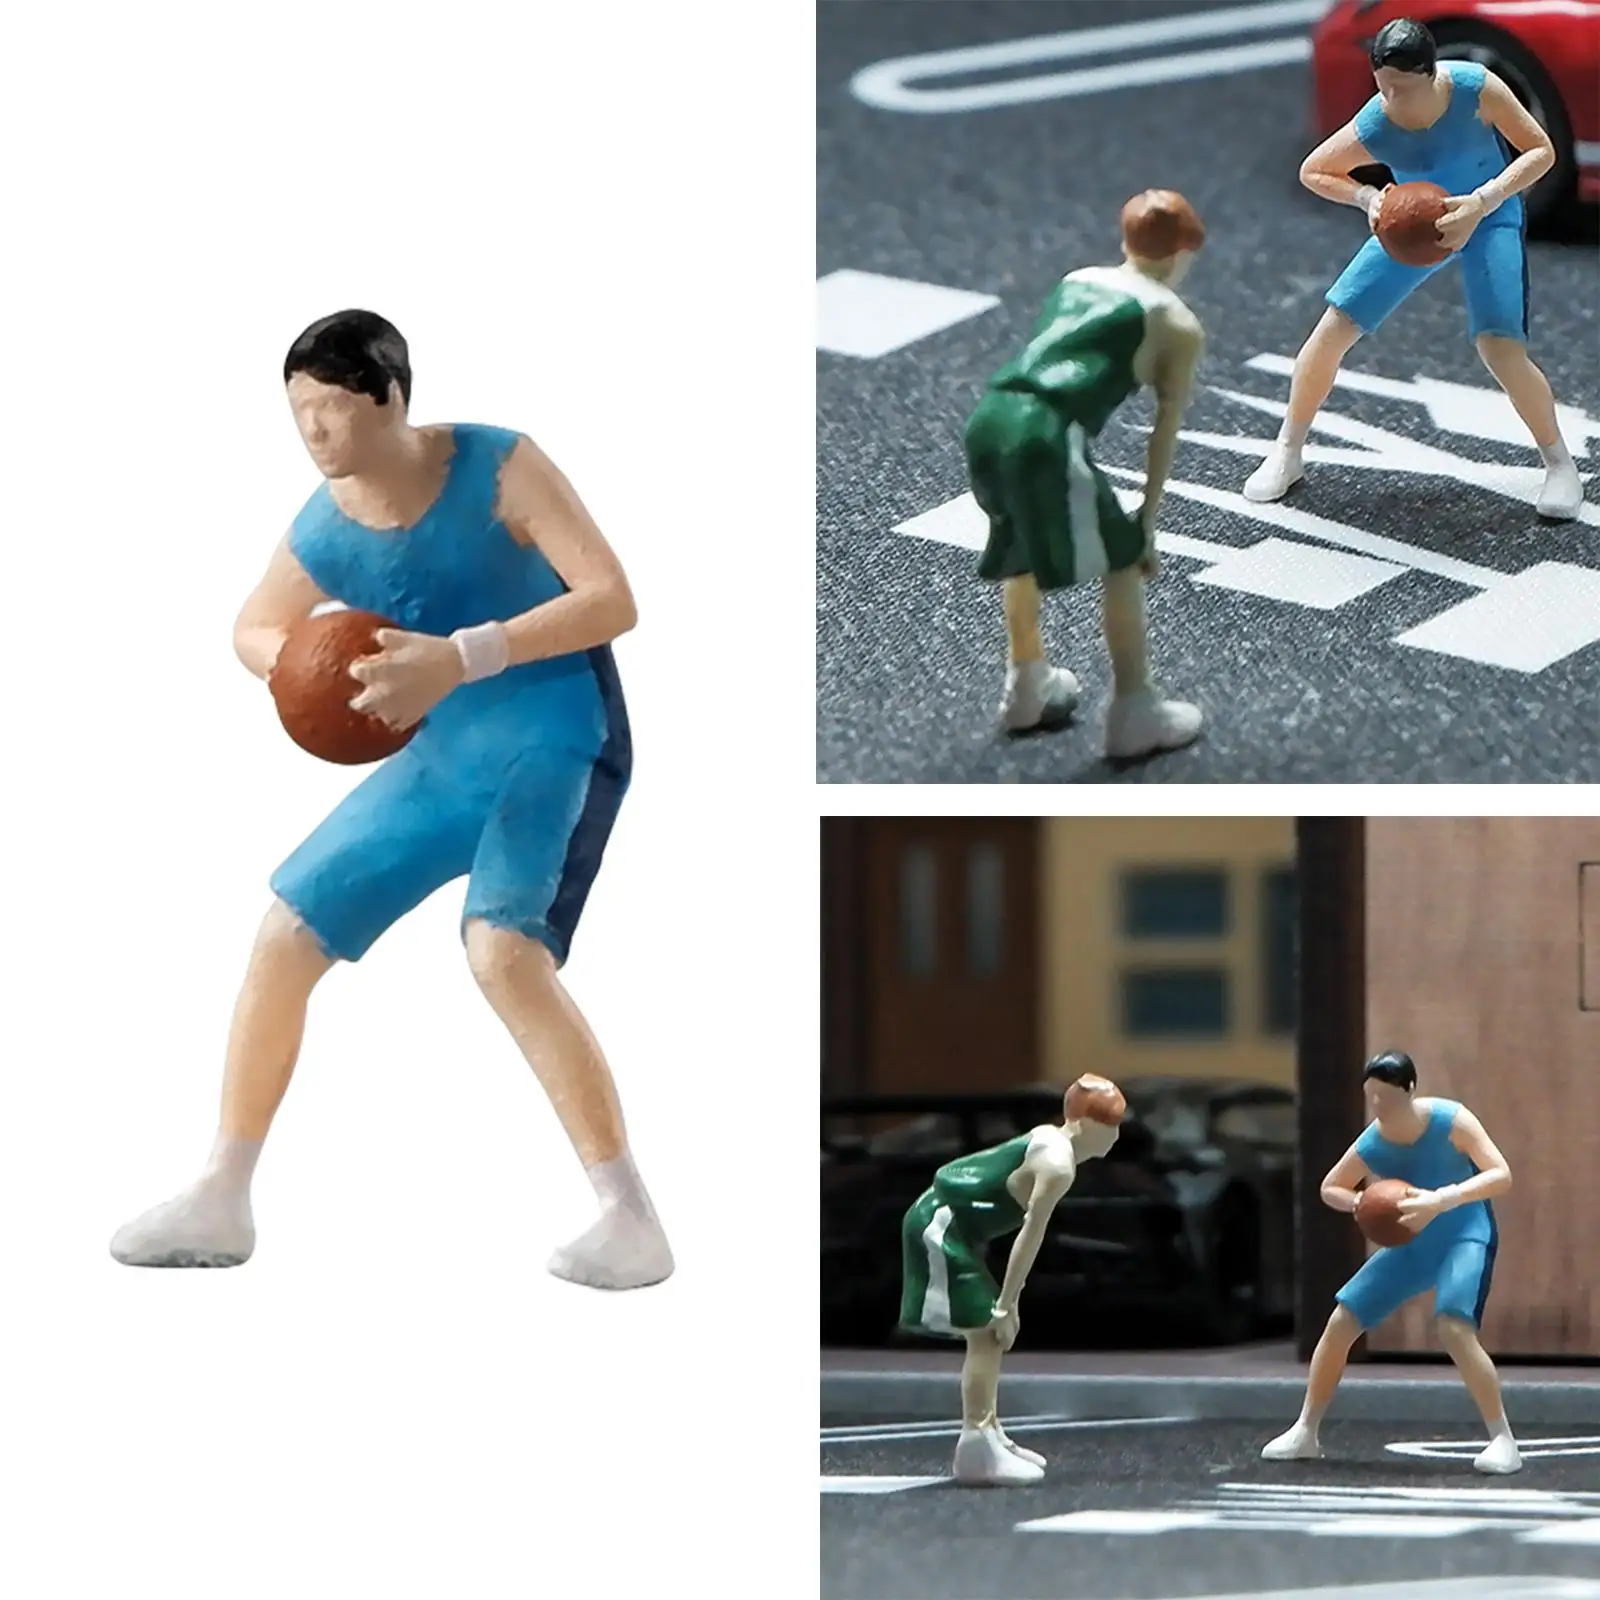 1:64 People Figures Desk Decoration Basketball Boy Figures for Miniature Scene Diorama Dollhouse Photography Props Decoration